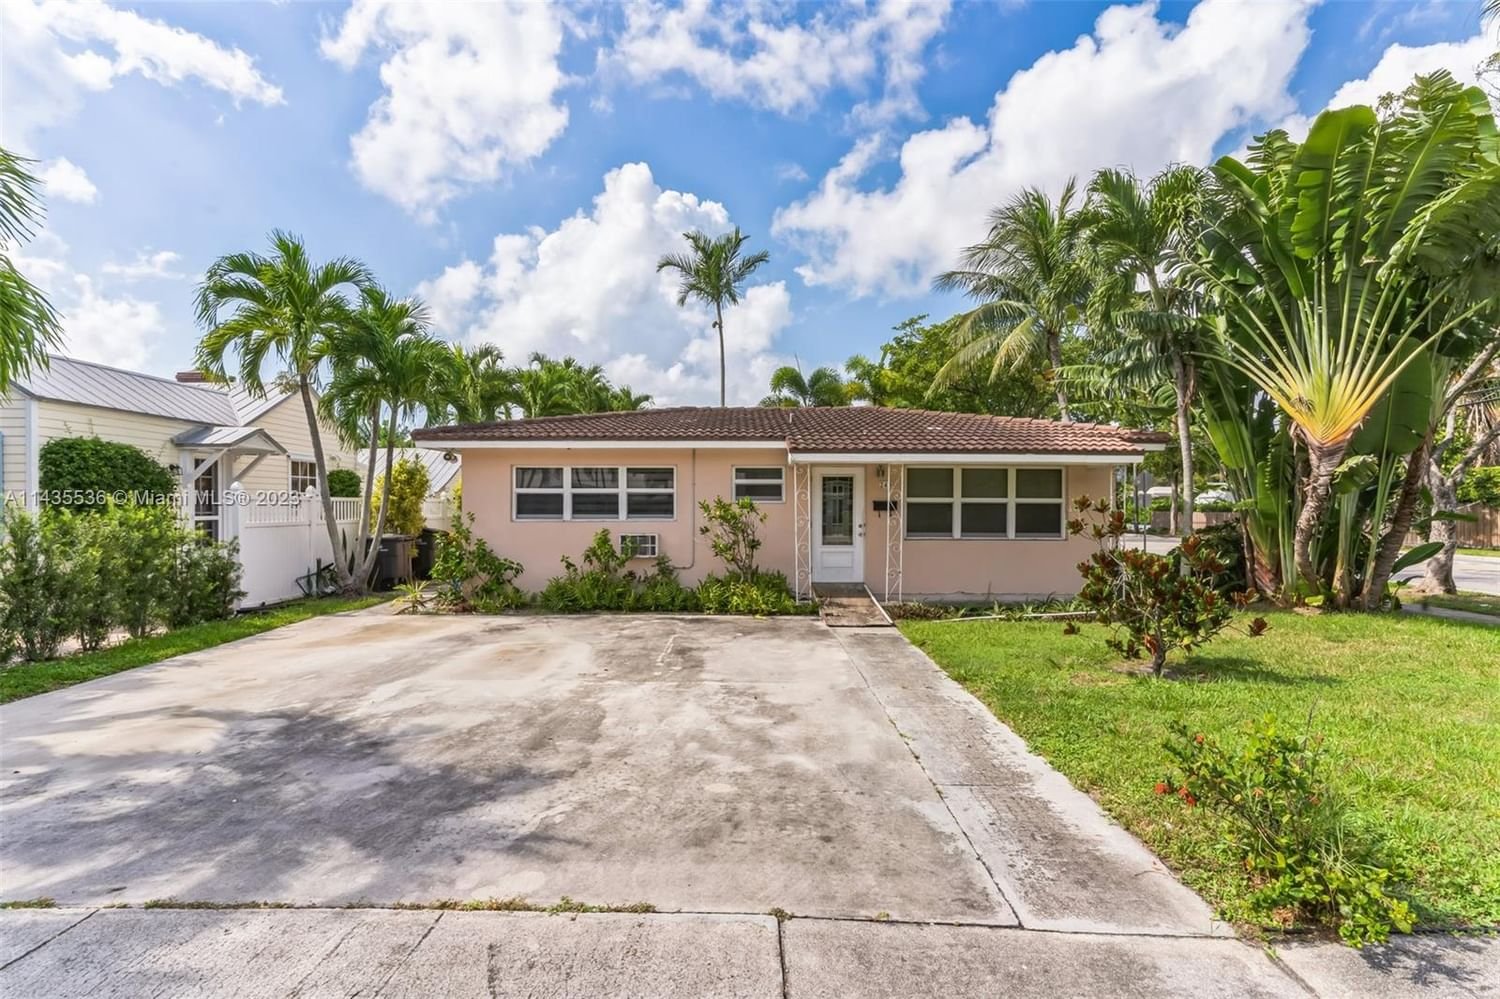 Real estate property located at 240 Marlborough Rd, Palm Beach County, West Palm Beach, FL